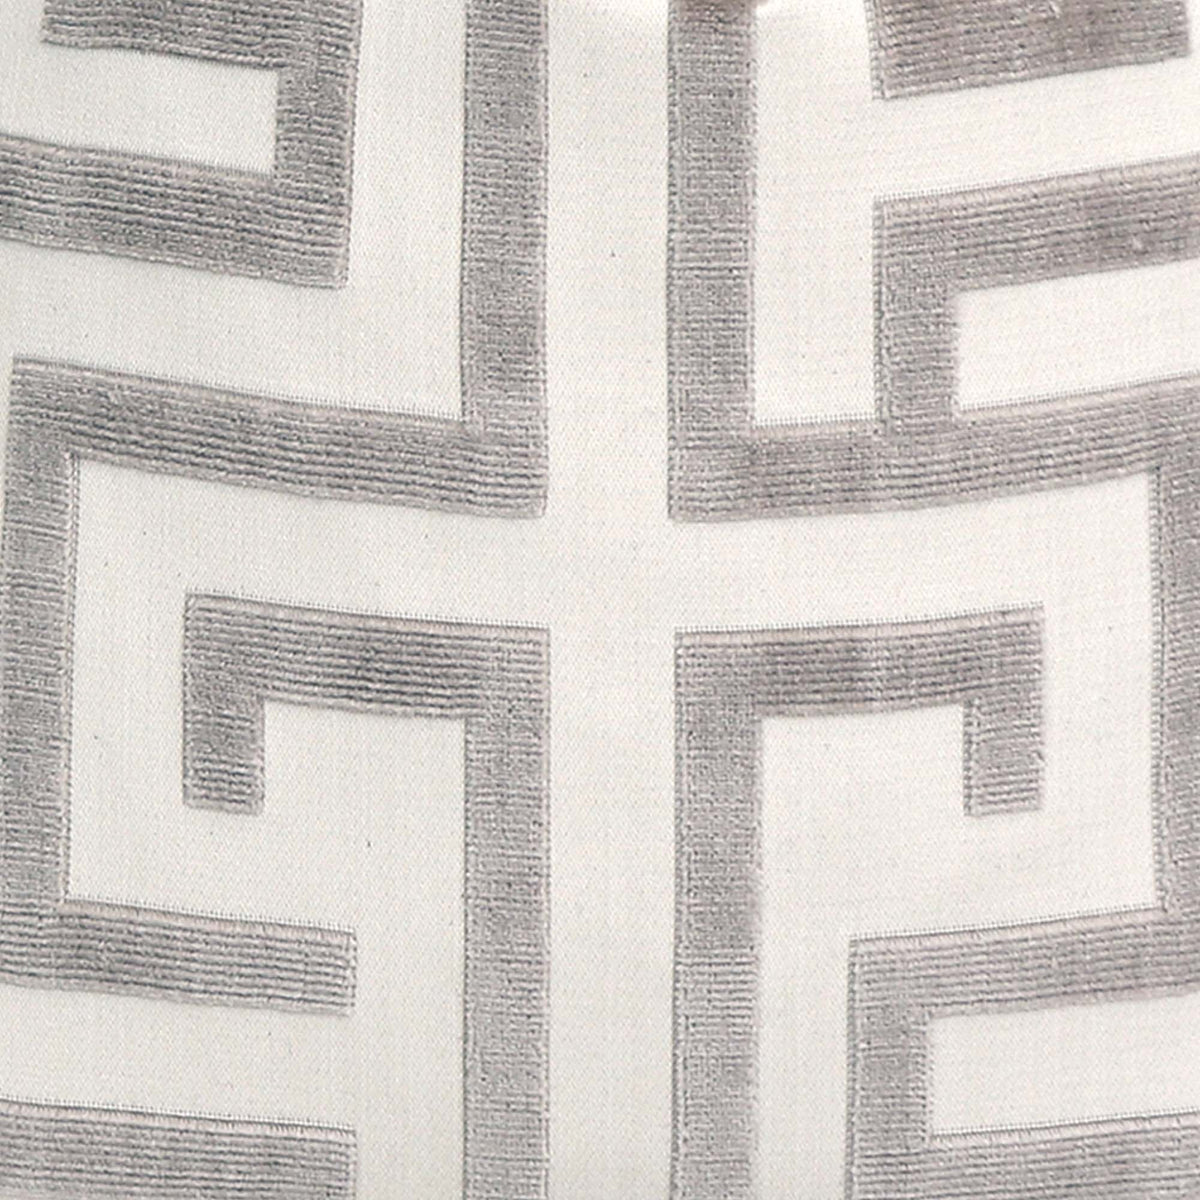 Ming Trail Velvet Gray / 4x4 inch Fabric Swatch